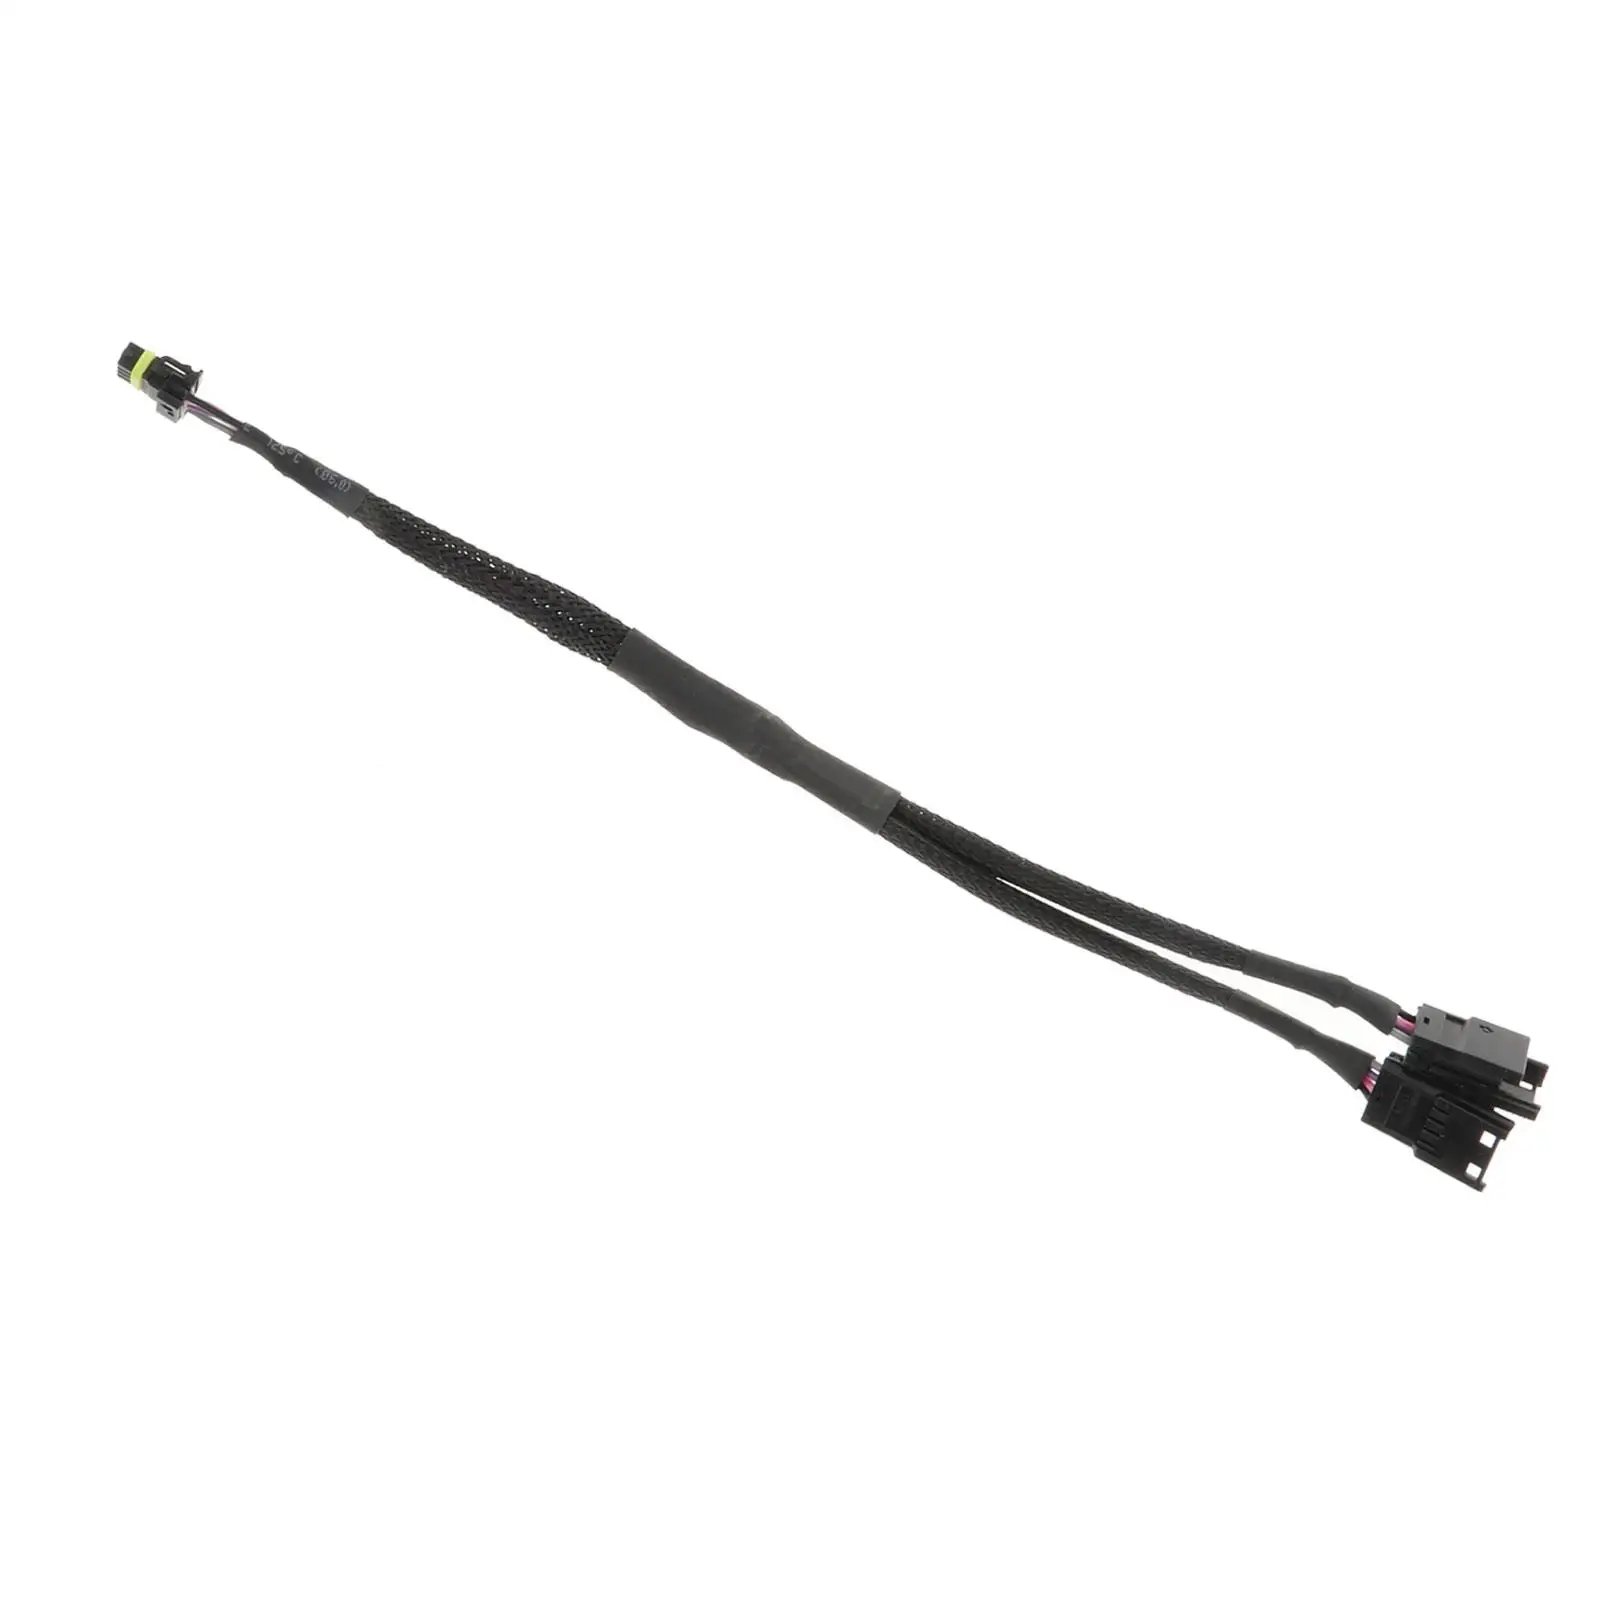 Bus Y Splitter Cable, Bus Y Splitter Wire, 558-465 Wiring Harness Bus Efi Y Splitter Cable Harness, for EFI